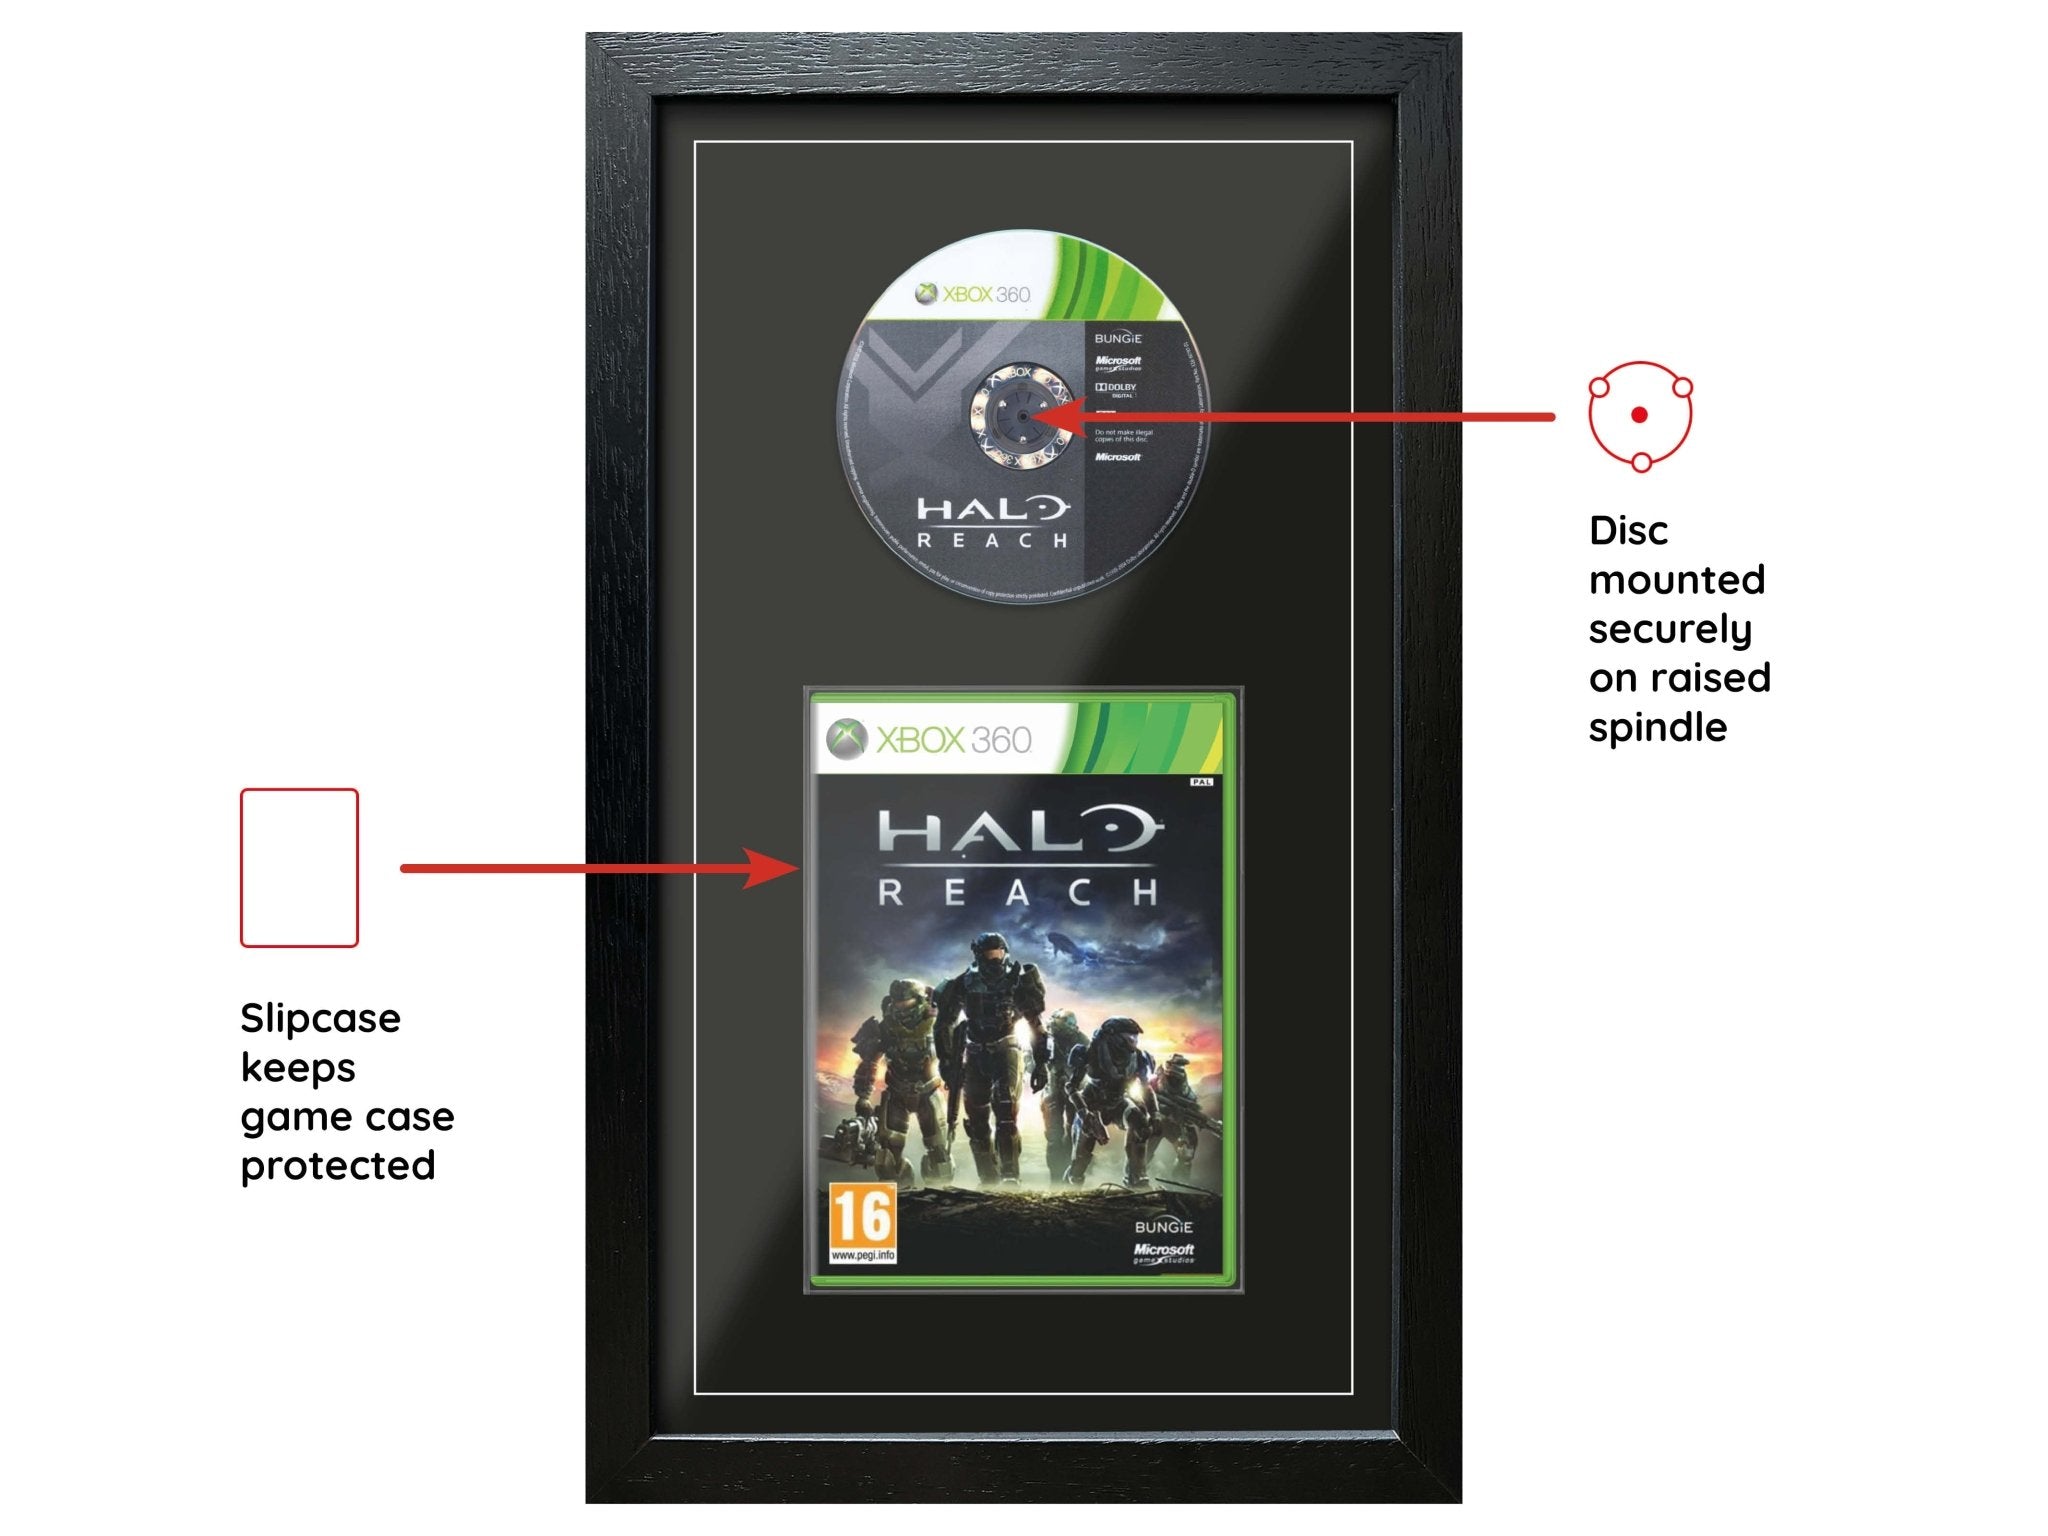 Halo: Reach (Exhibition Range) Framed Game - Frame-A-Game